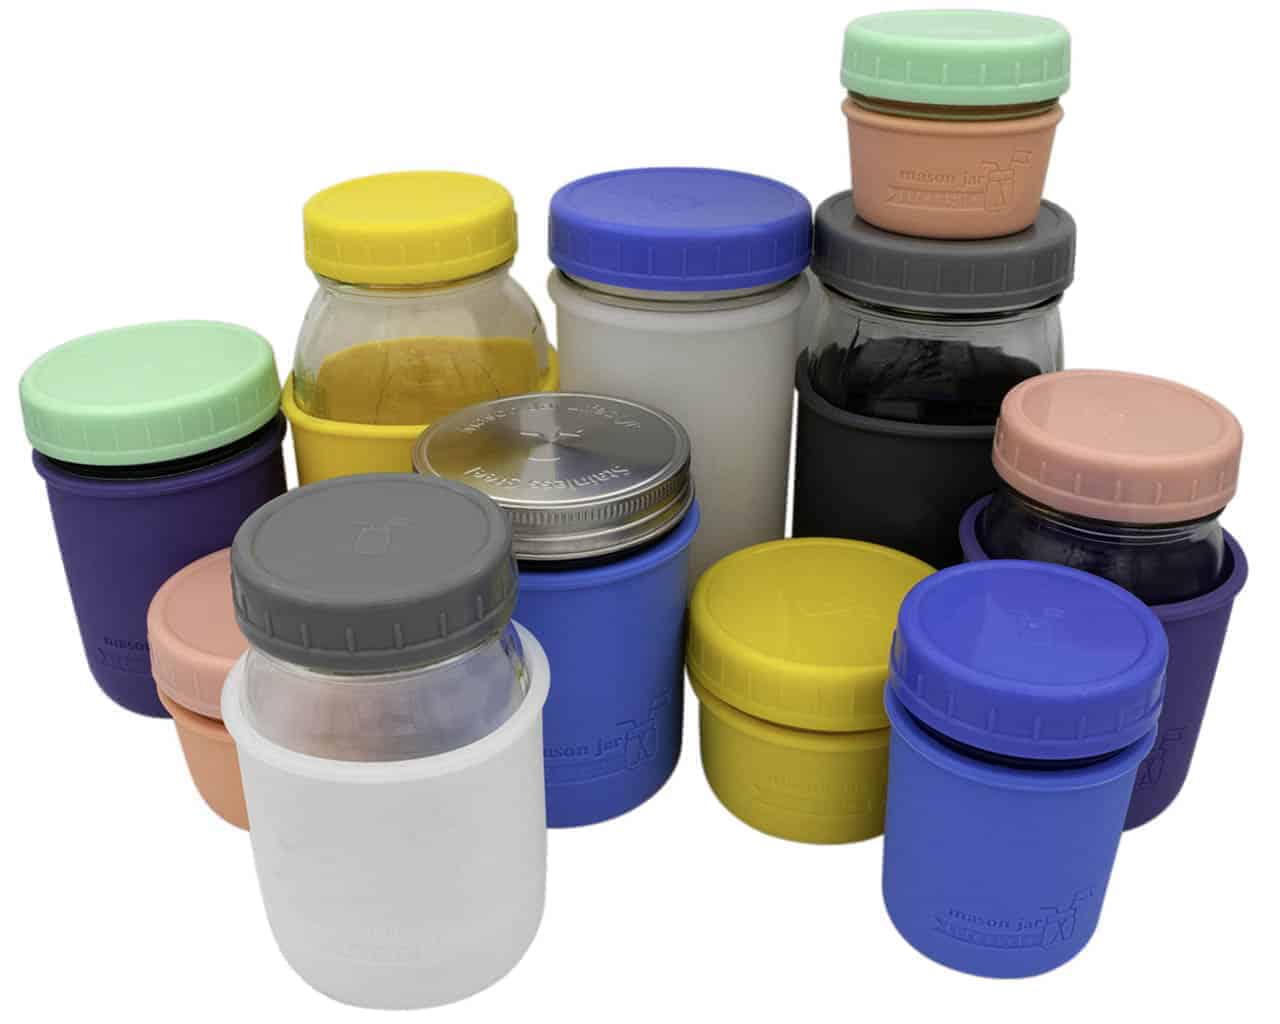 Mason Jar Lifestyle Leak proof plastic storage lids and silicone koozies on regular mouth 4oz, 8oz, 16oz, 32oz half pint quart Mason jars 5 colors